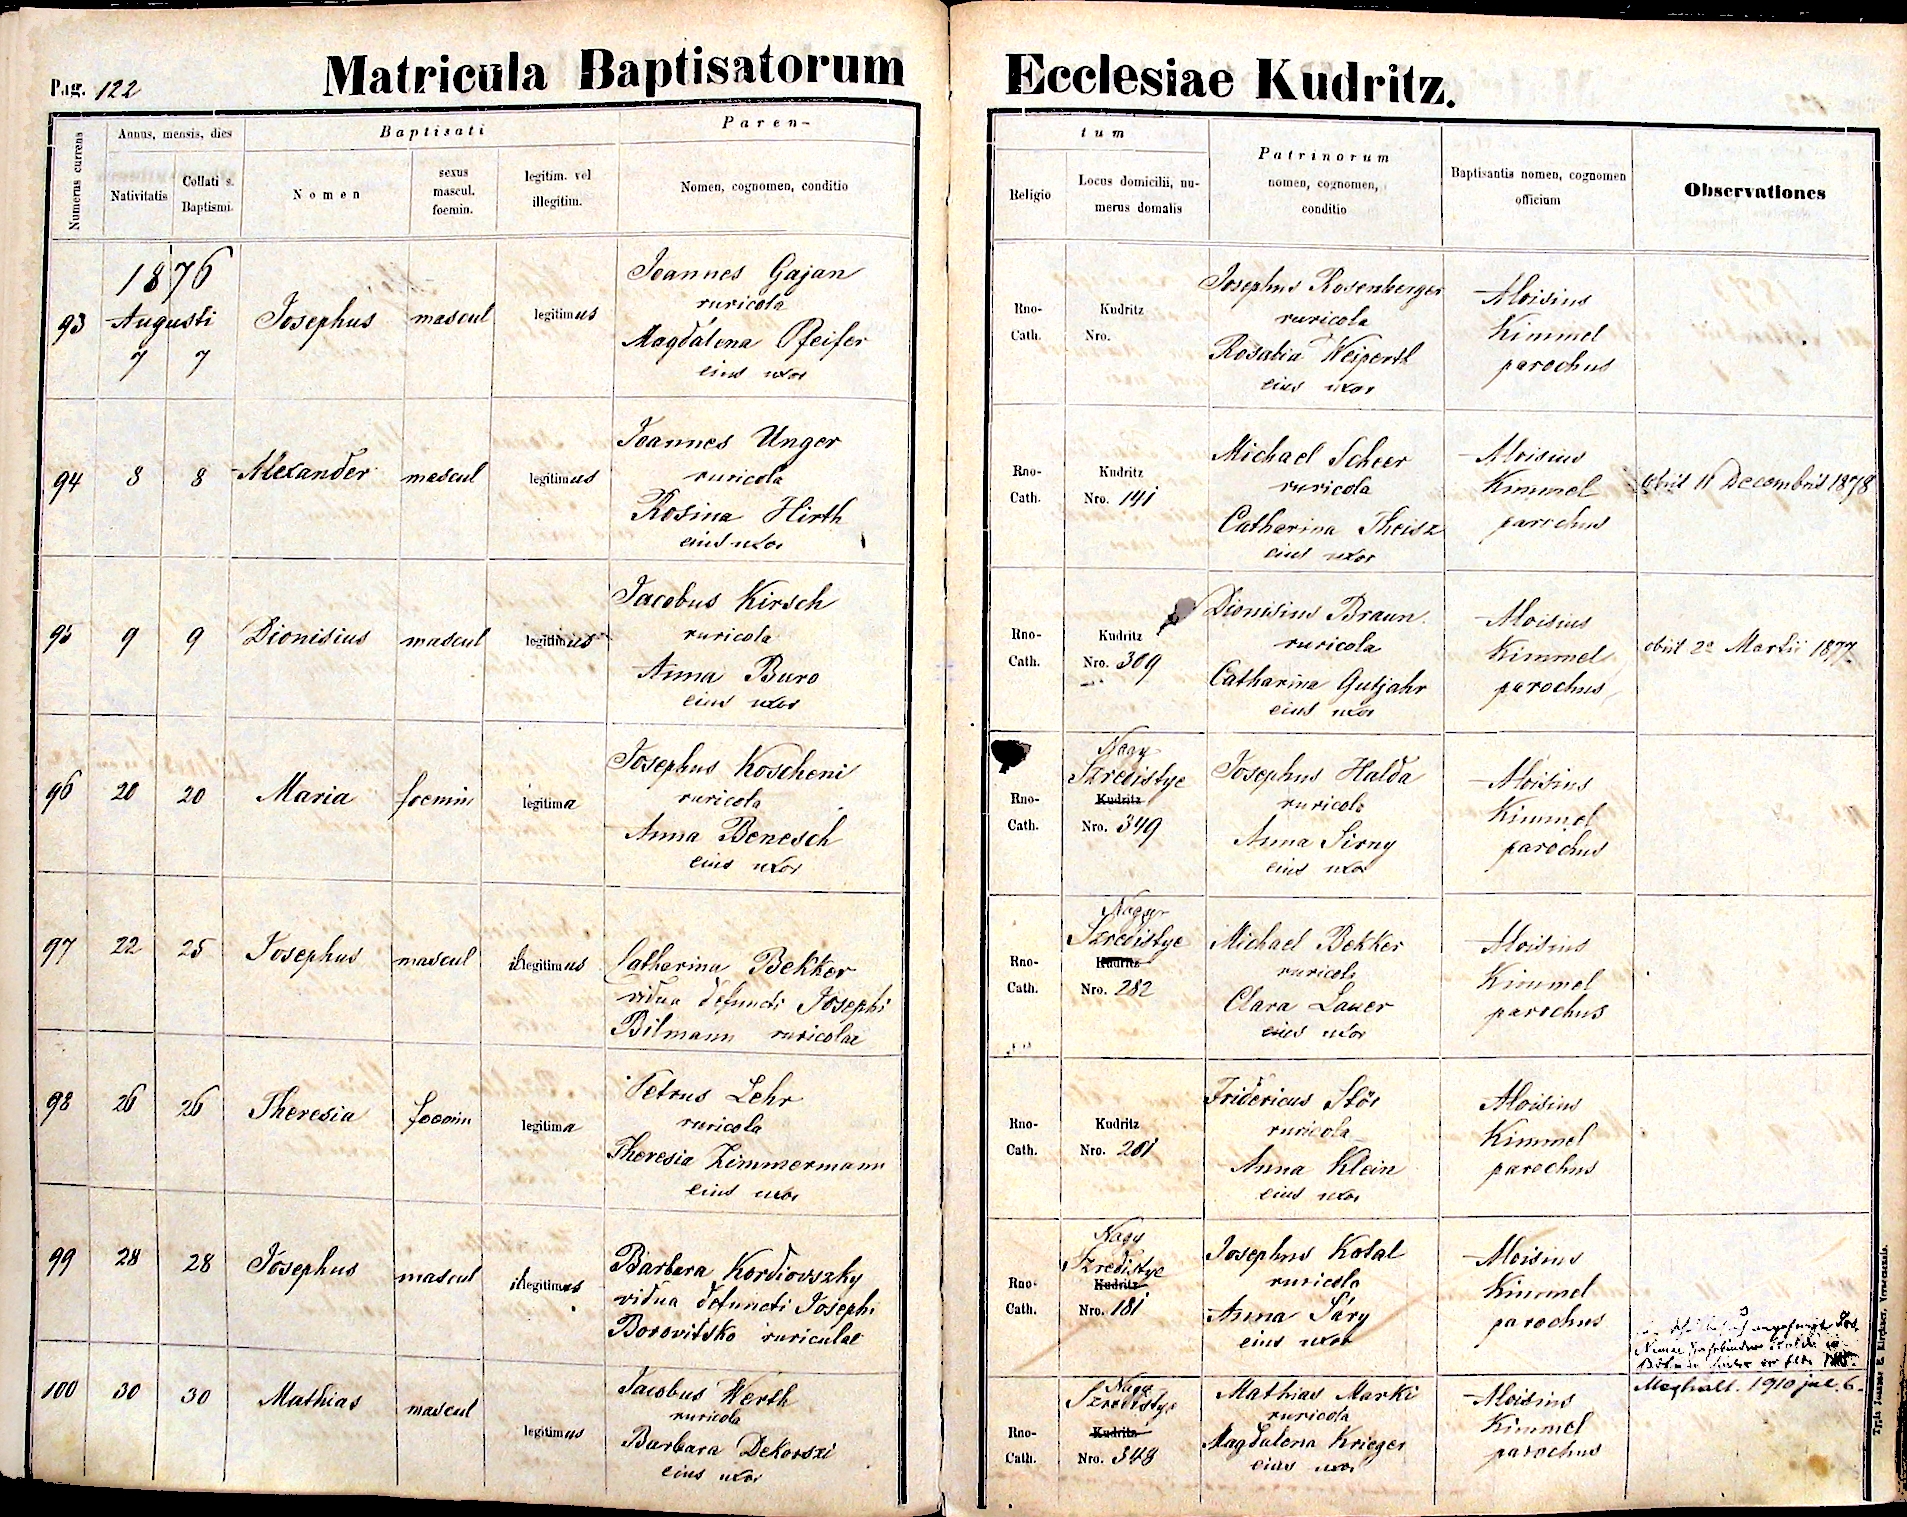 images/church_records/BIRTHS/1870-1879B/1876/122